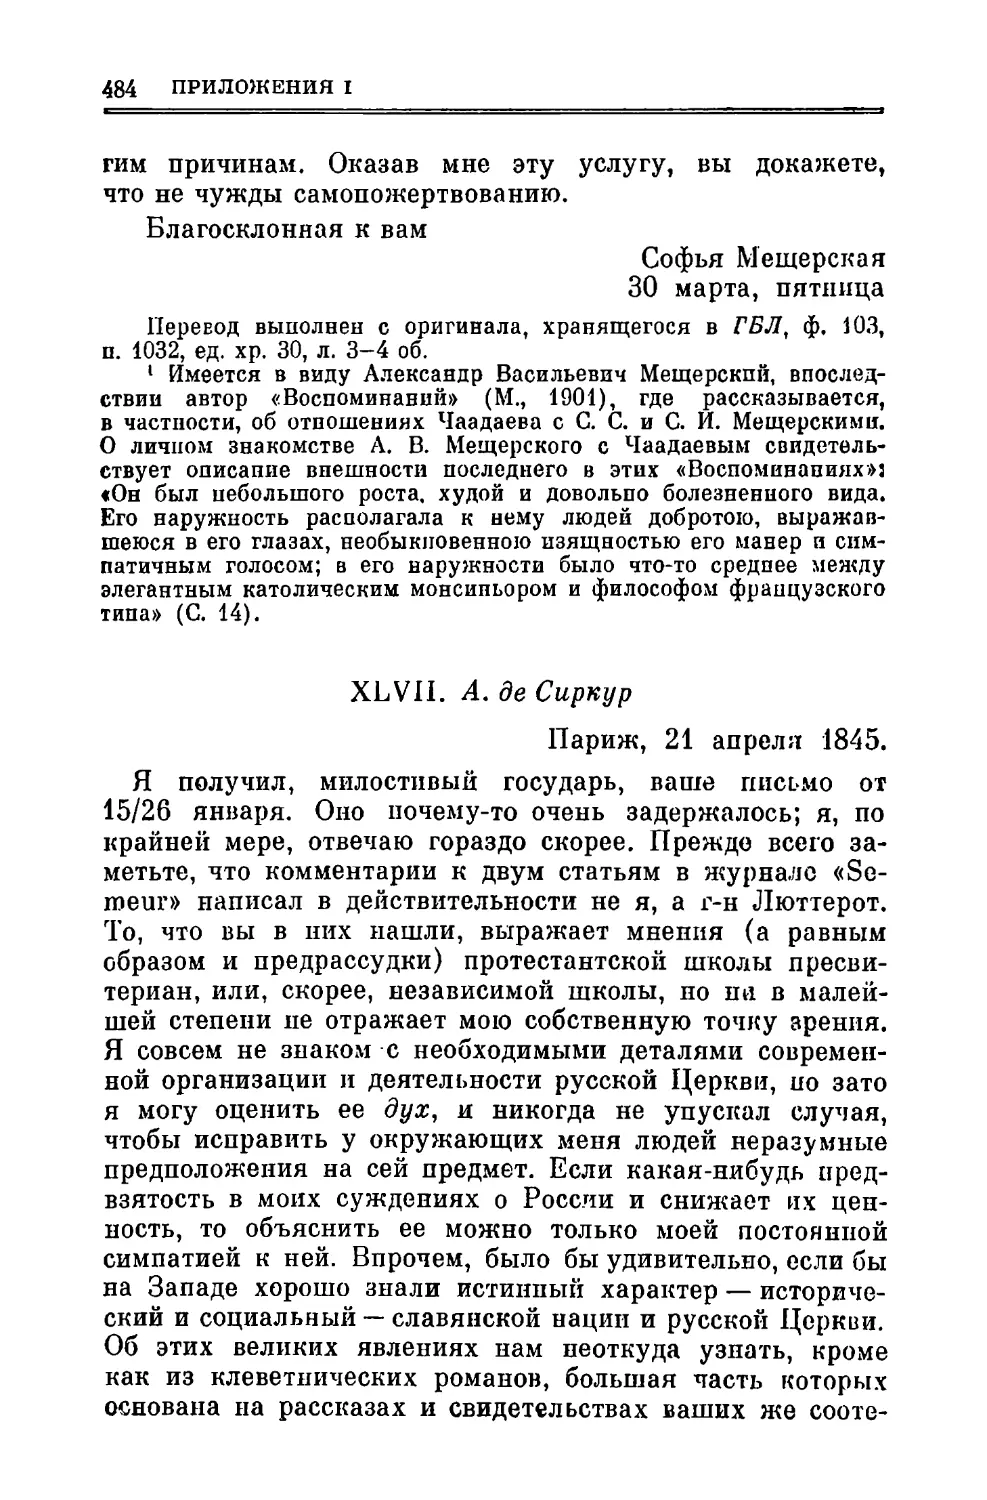 XLVII. Сиркур А.де. 21.IV.1845